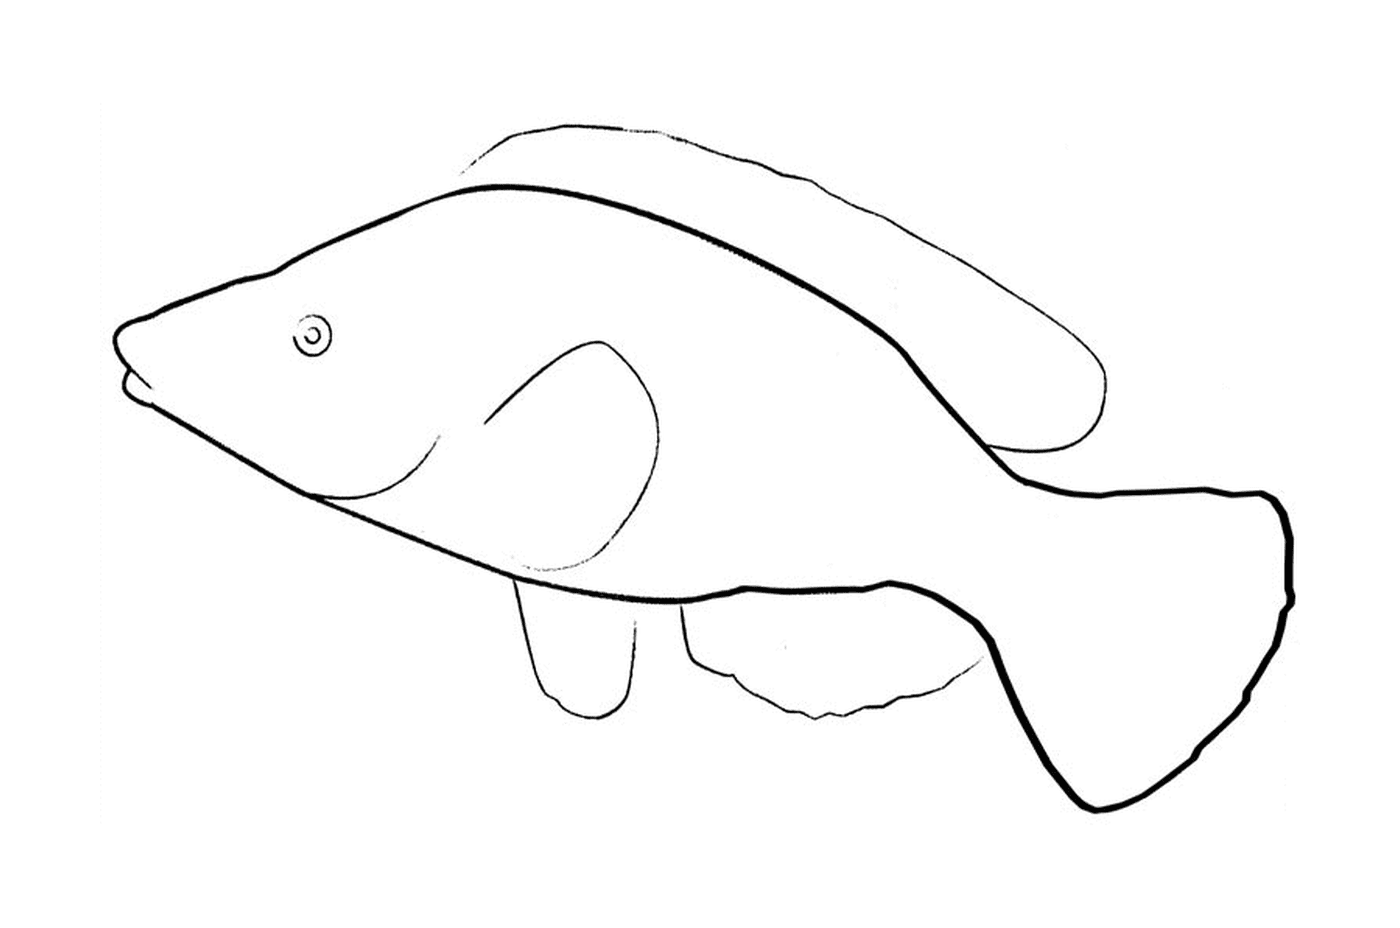  Fish drawing April 